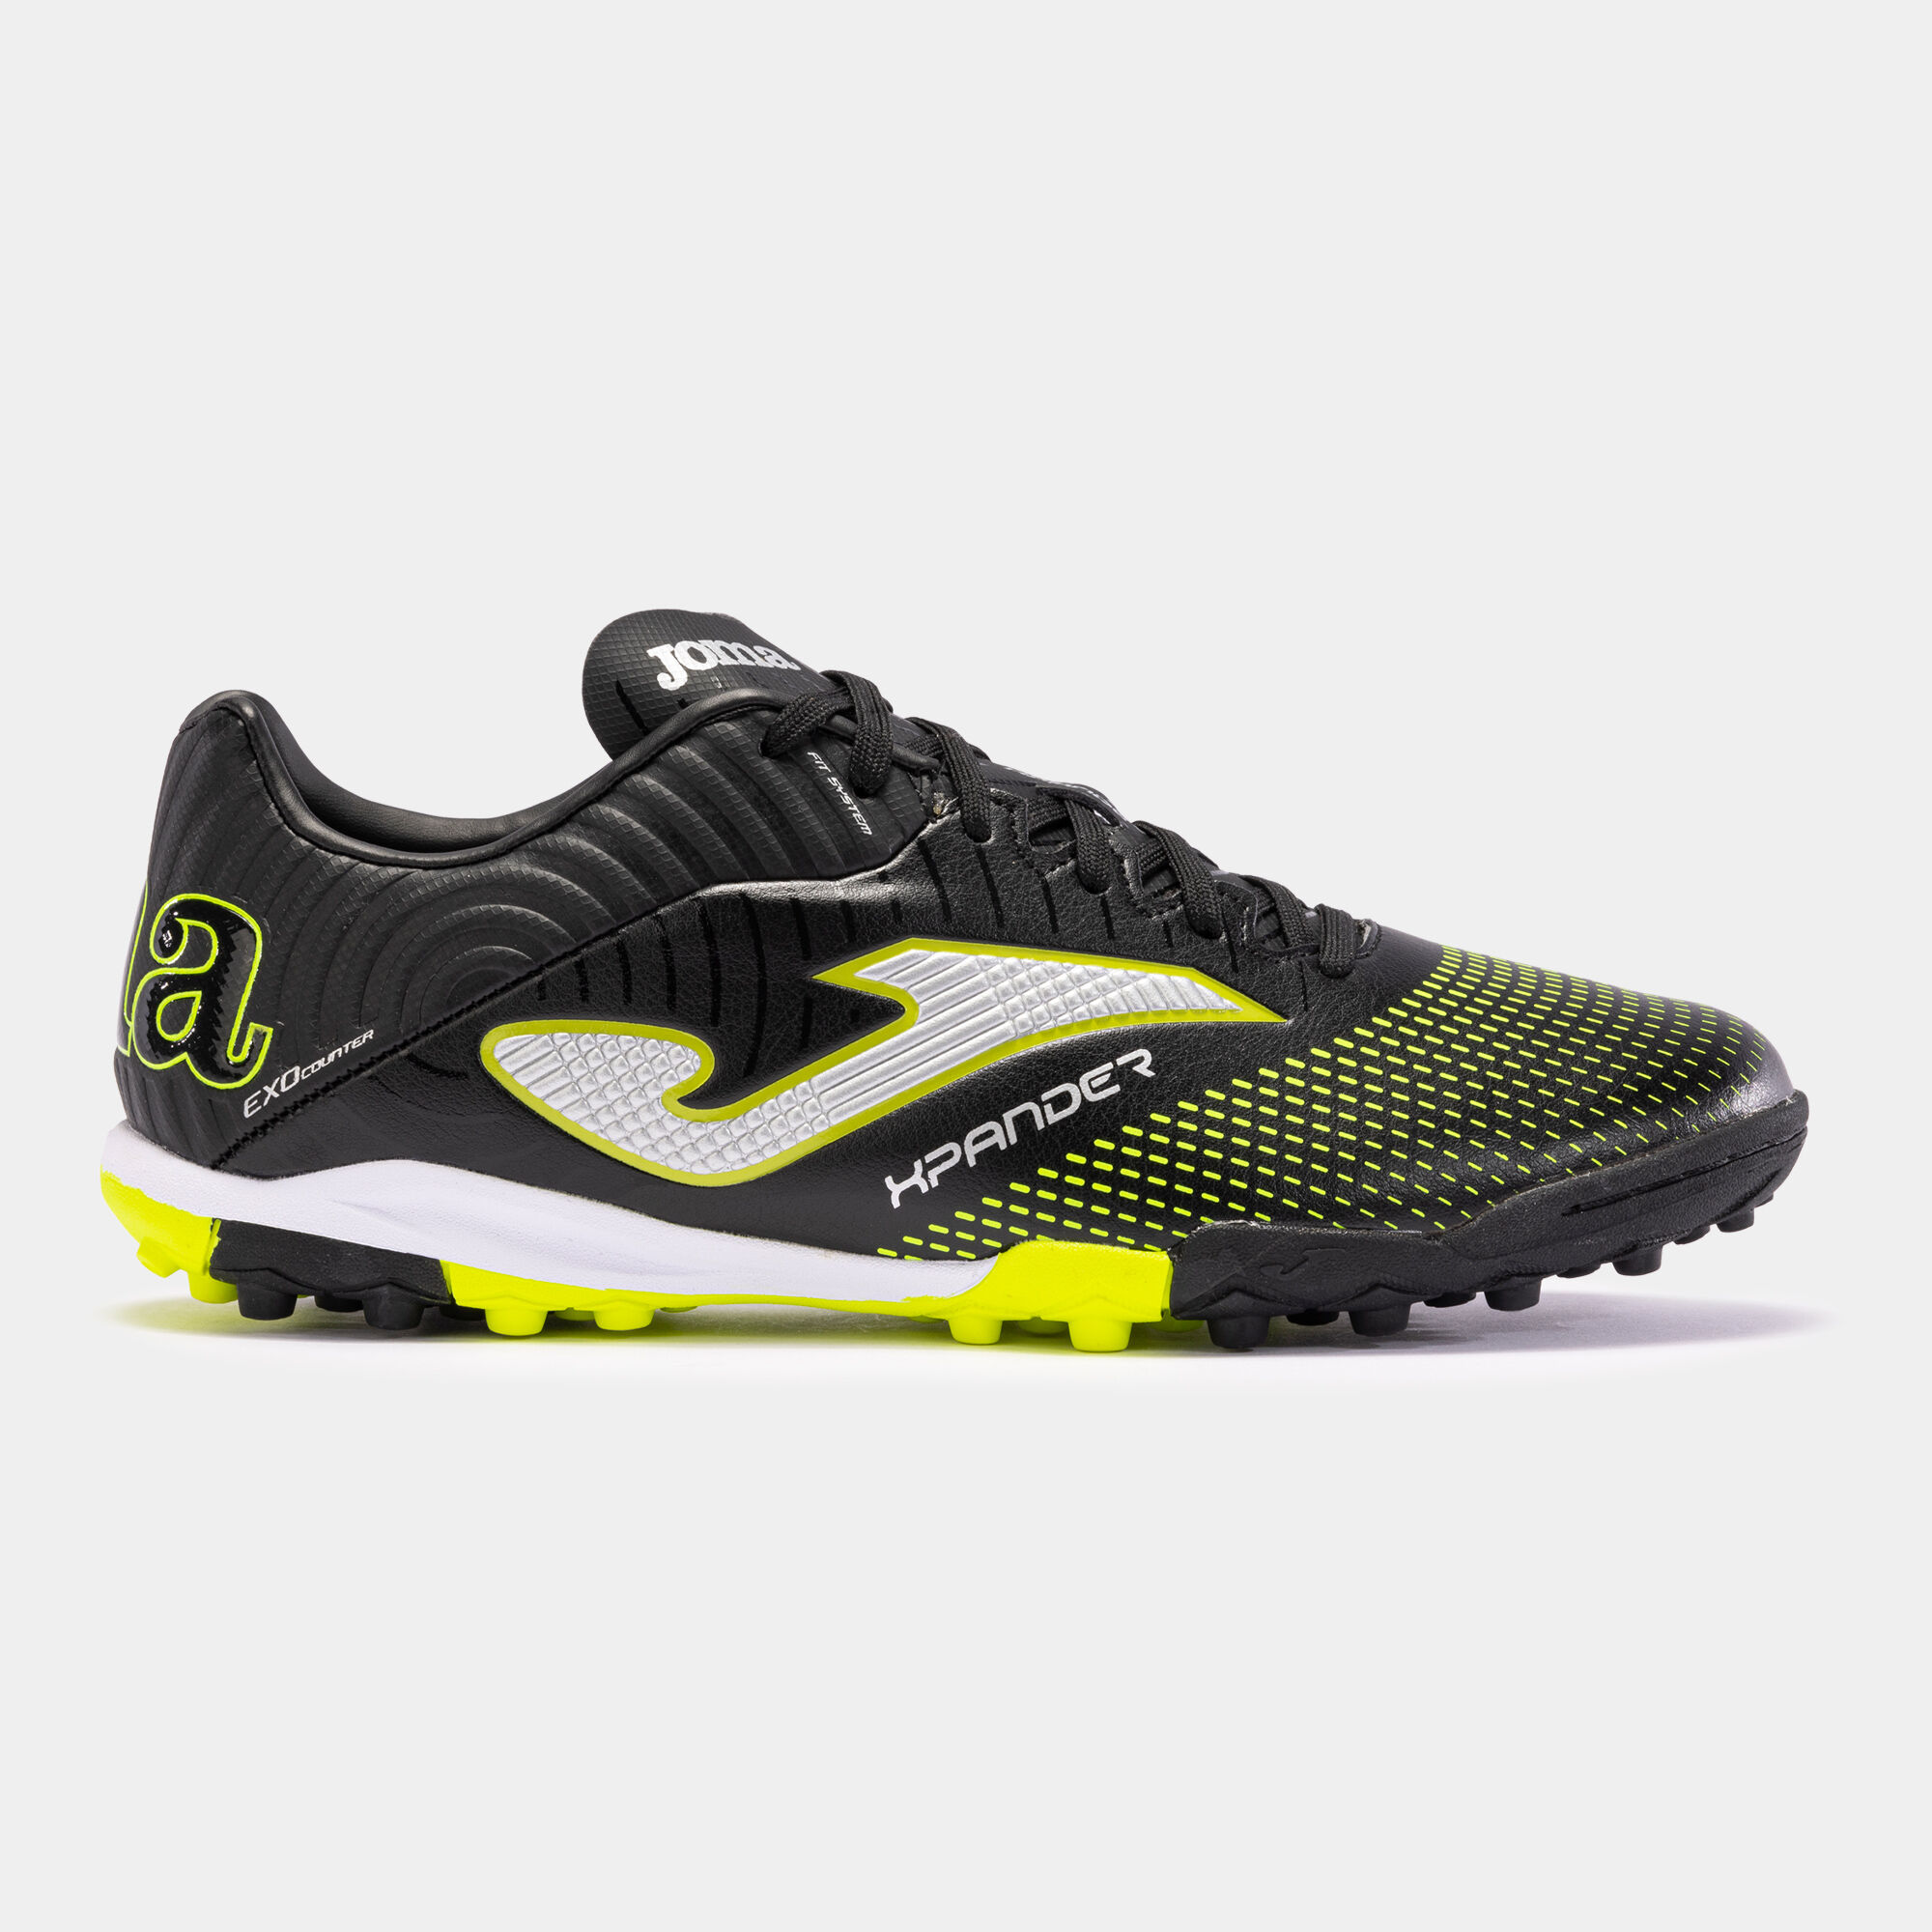 Football boots Xpander 23 turf black fluorescent yellow